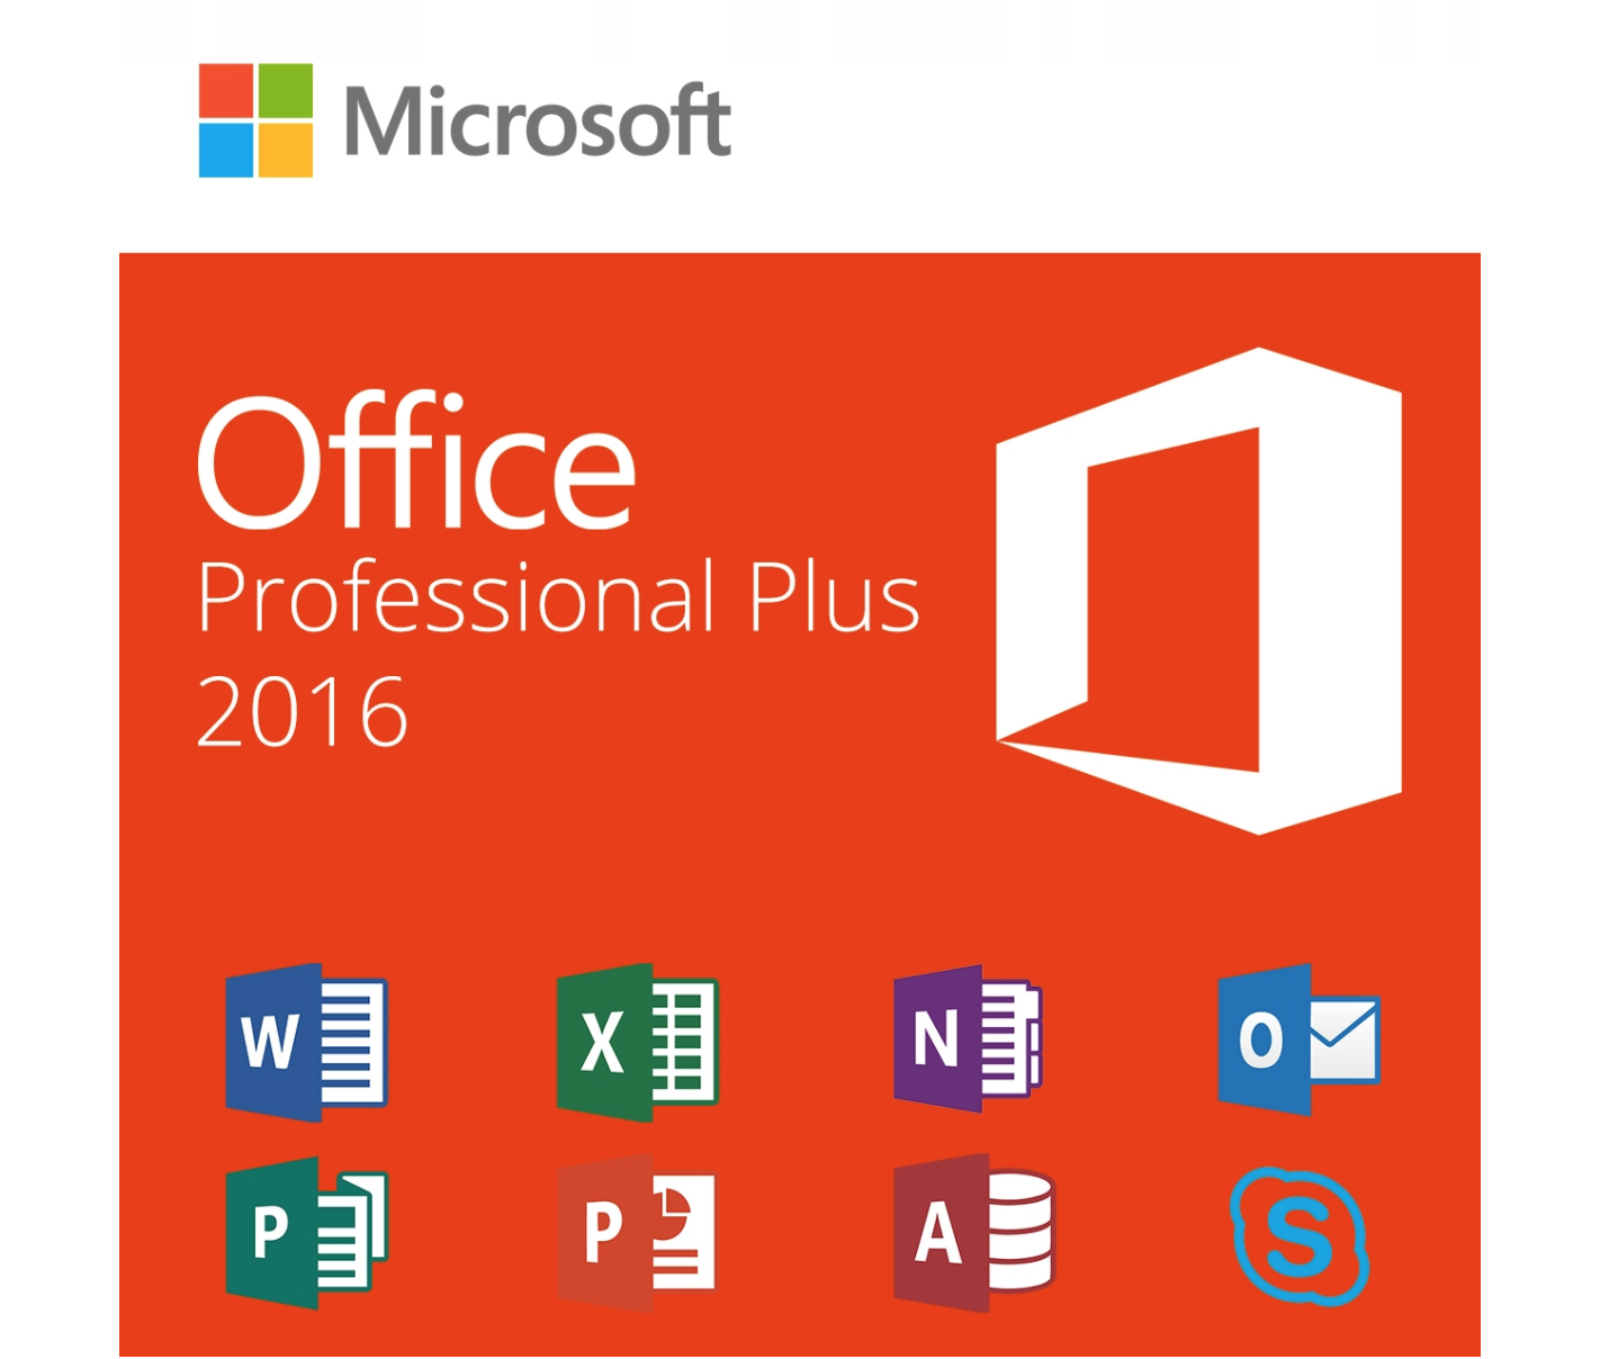 Microsoft Office 2016 Pro Plus. Office 2016 Pro Plus. Microsoft Office профессиональный 2016. Microsoft professional Plus 2016.